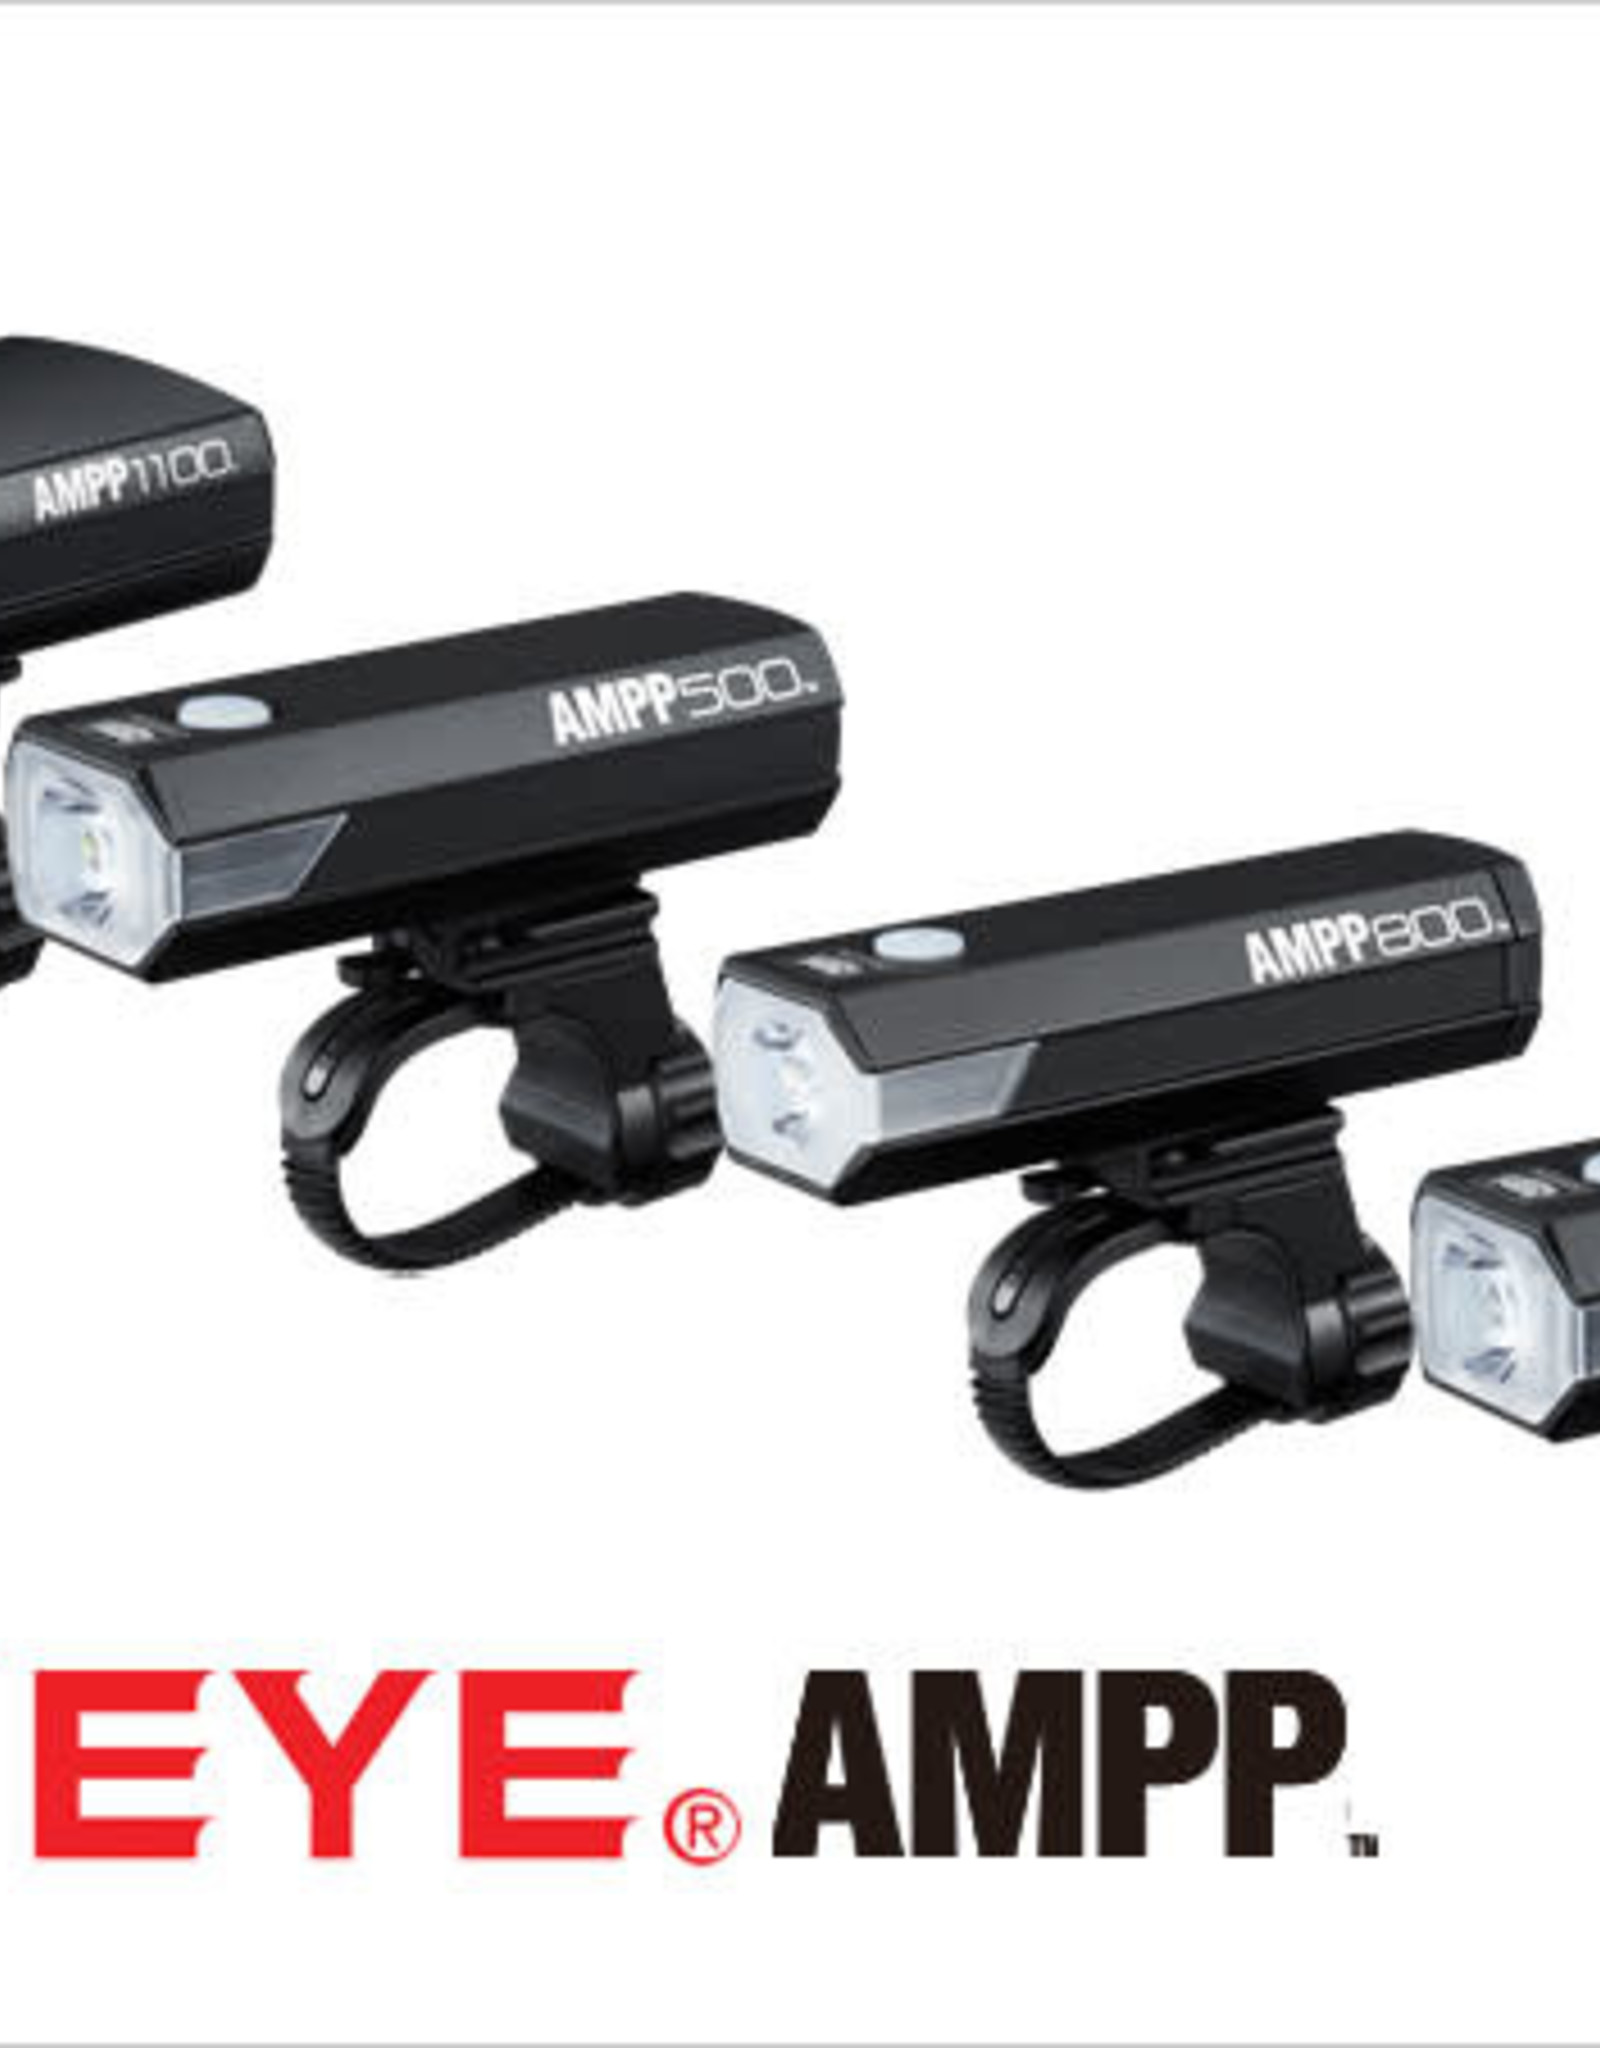 CatEye Ampp Series Bicycle LED Headlights 